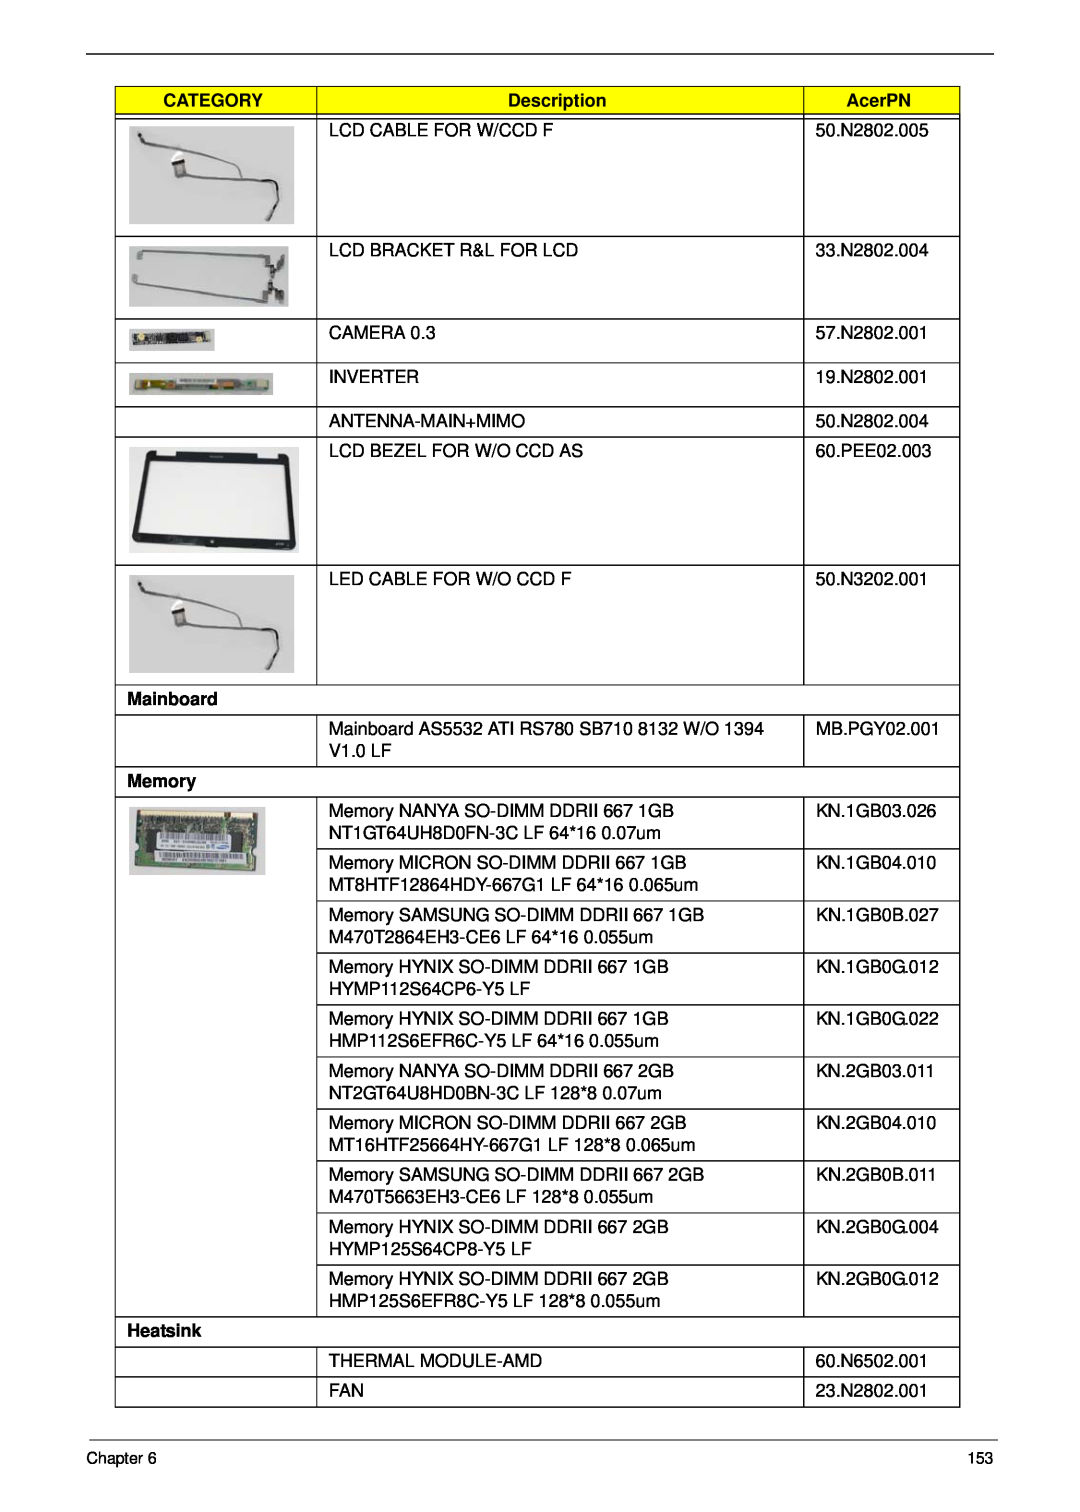 Acer 5532 manual Category, Description, AcerPN, Mainboard, Memory, Heatsink 